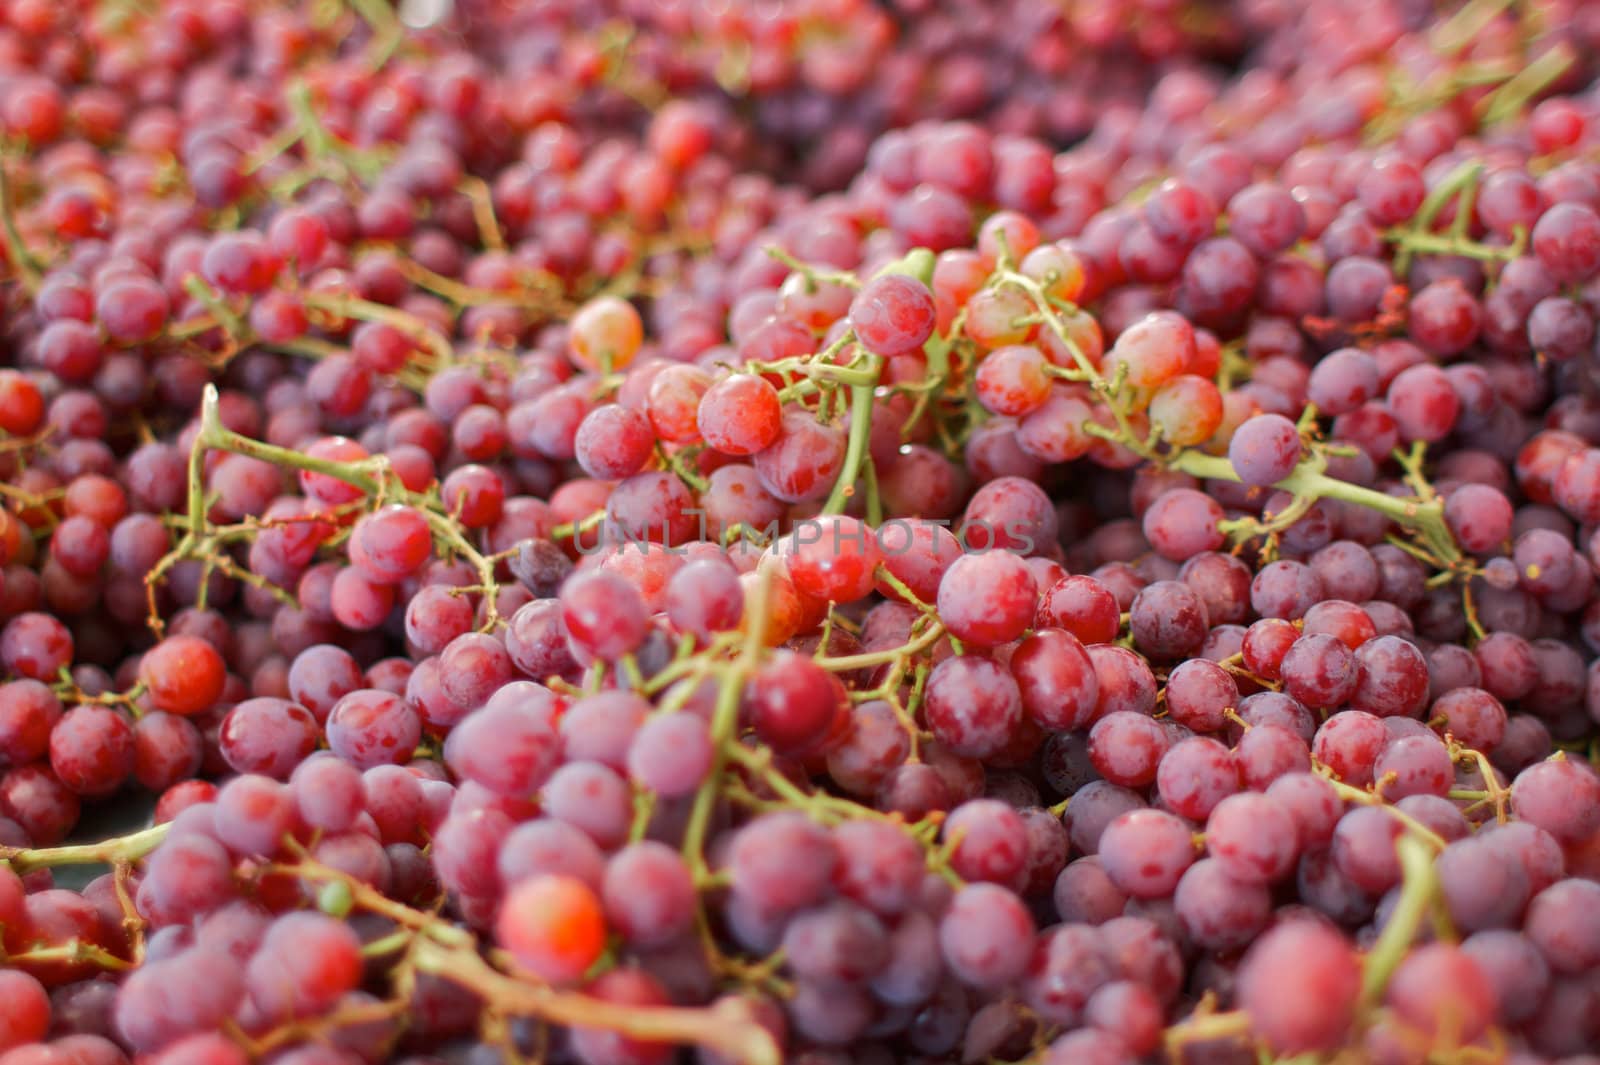 Farmers Market Grapes by bobkeenan